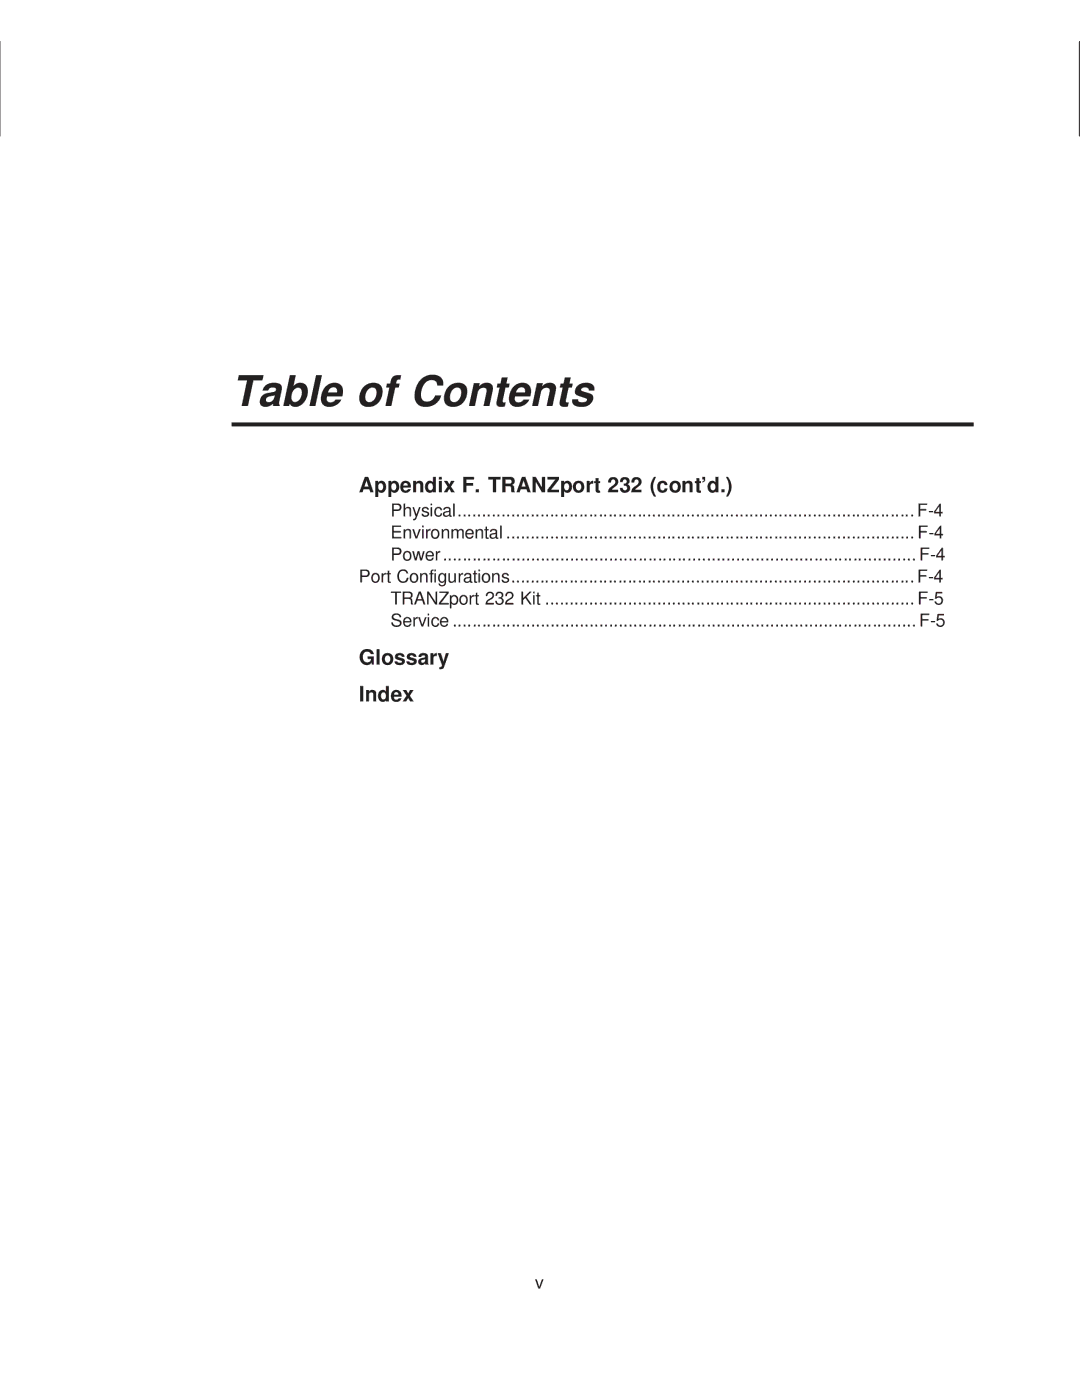 VeriFone TRANZ 460 manual Appendix F. TRANZport 232 cont’d, Glossary Index 